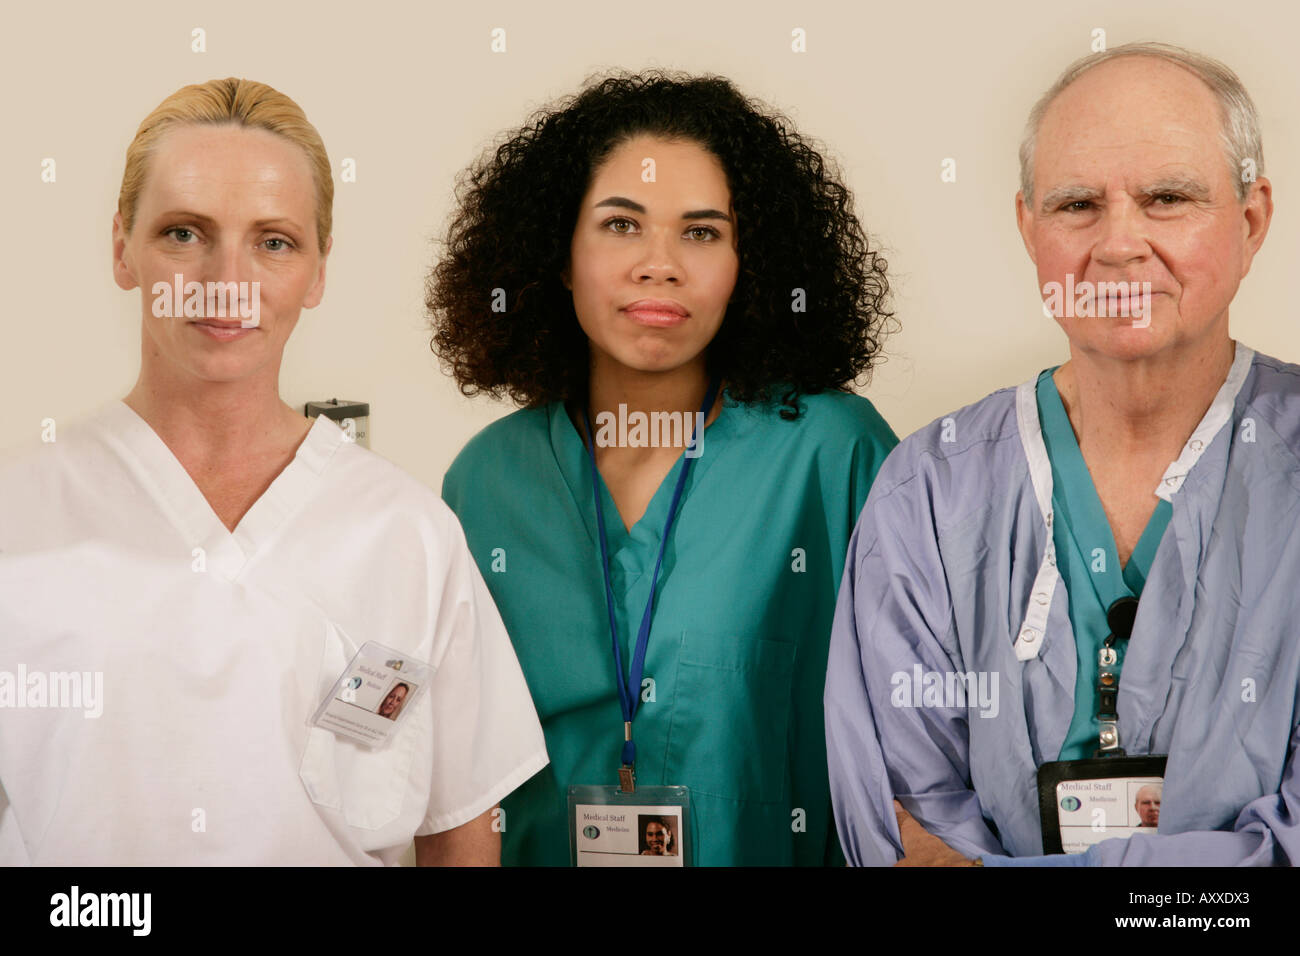 Medical Staff of three. Stock Photo